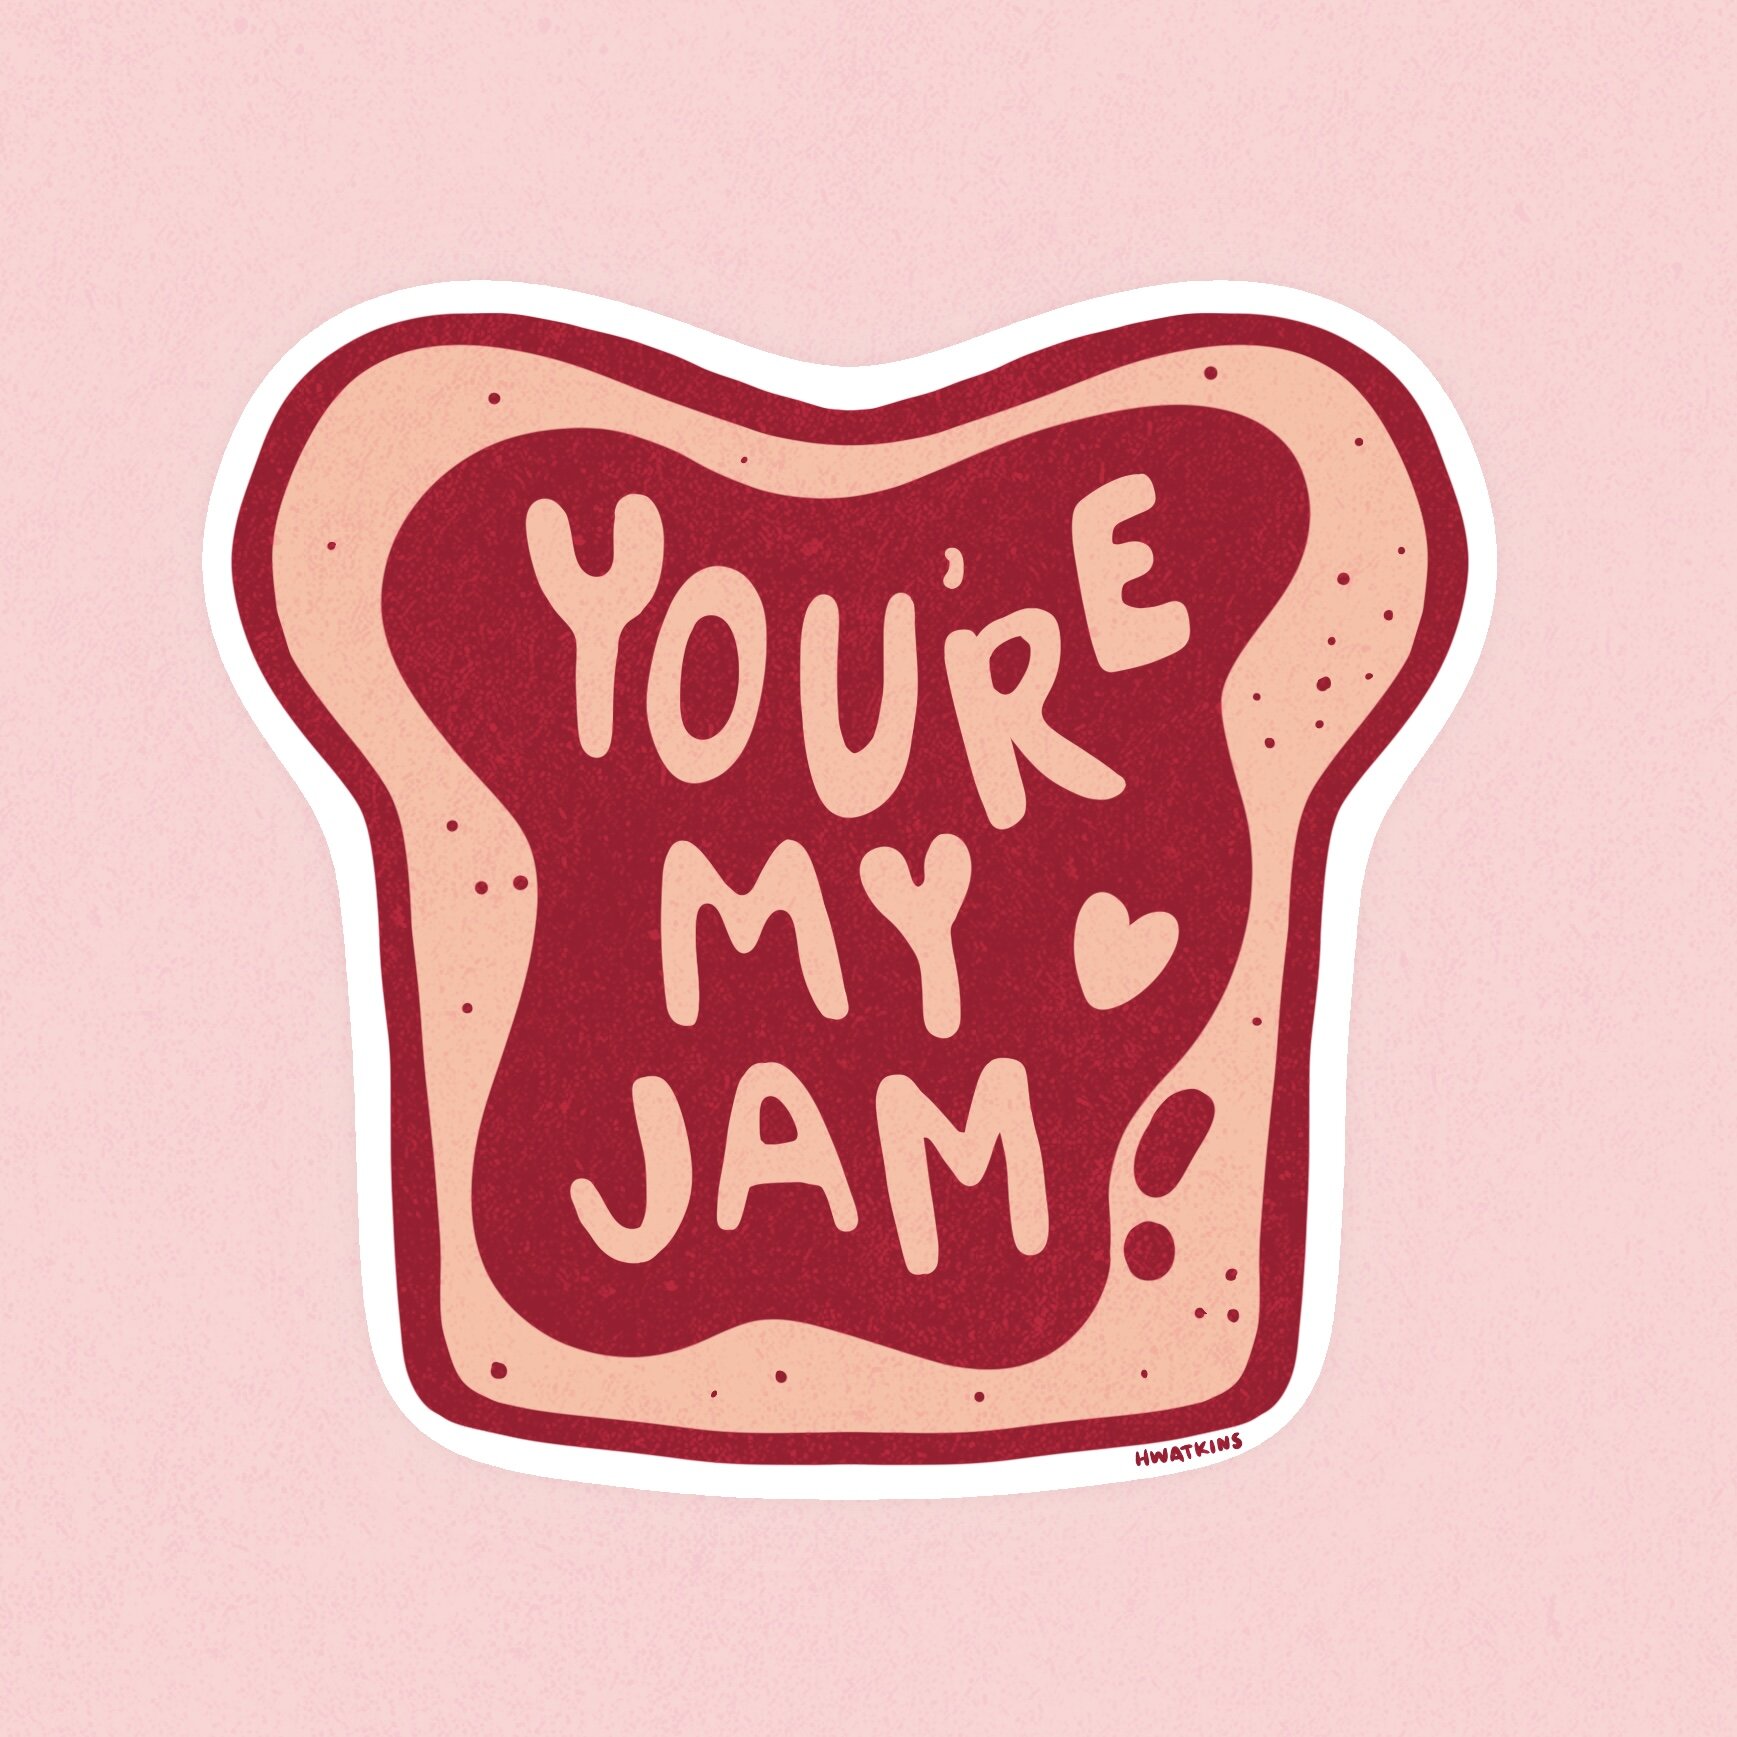 You're my jam 🍓🍇 Happy Valentine's Day!
❤️
#graphicdesign #stickerdesign #design #communicationdesign
#graphicdesigner #adobeillustrator #procreateart #stickershop 
#typography #freelancedesigner #creative #handlettering
#graphicdesigndaily #cincin